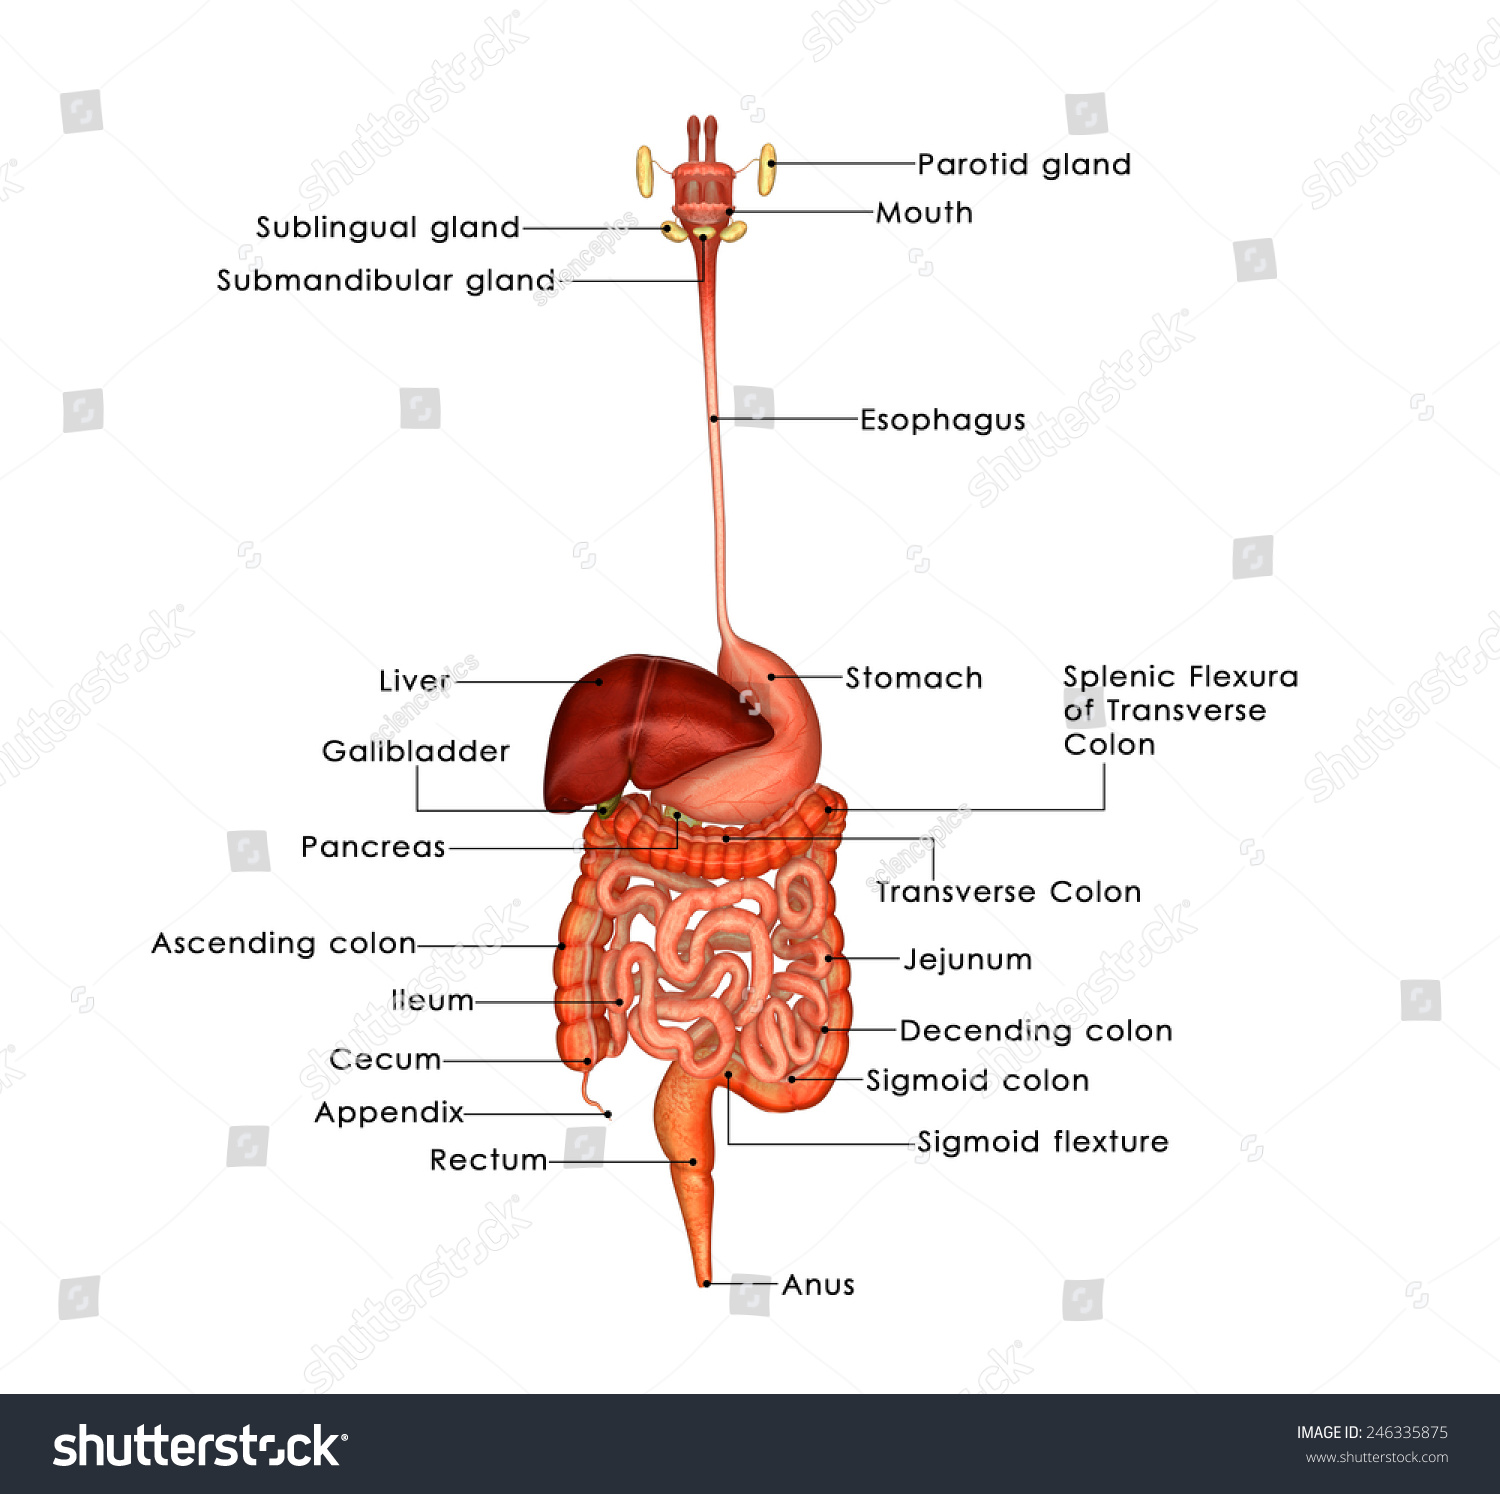 Digestive System Stock Illustration 246335875 - Shutterstock